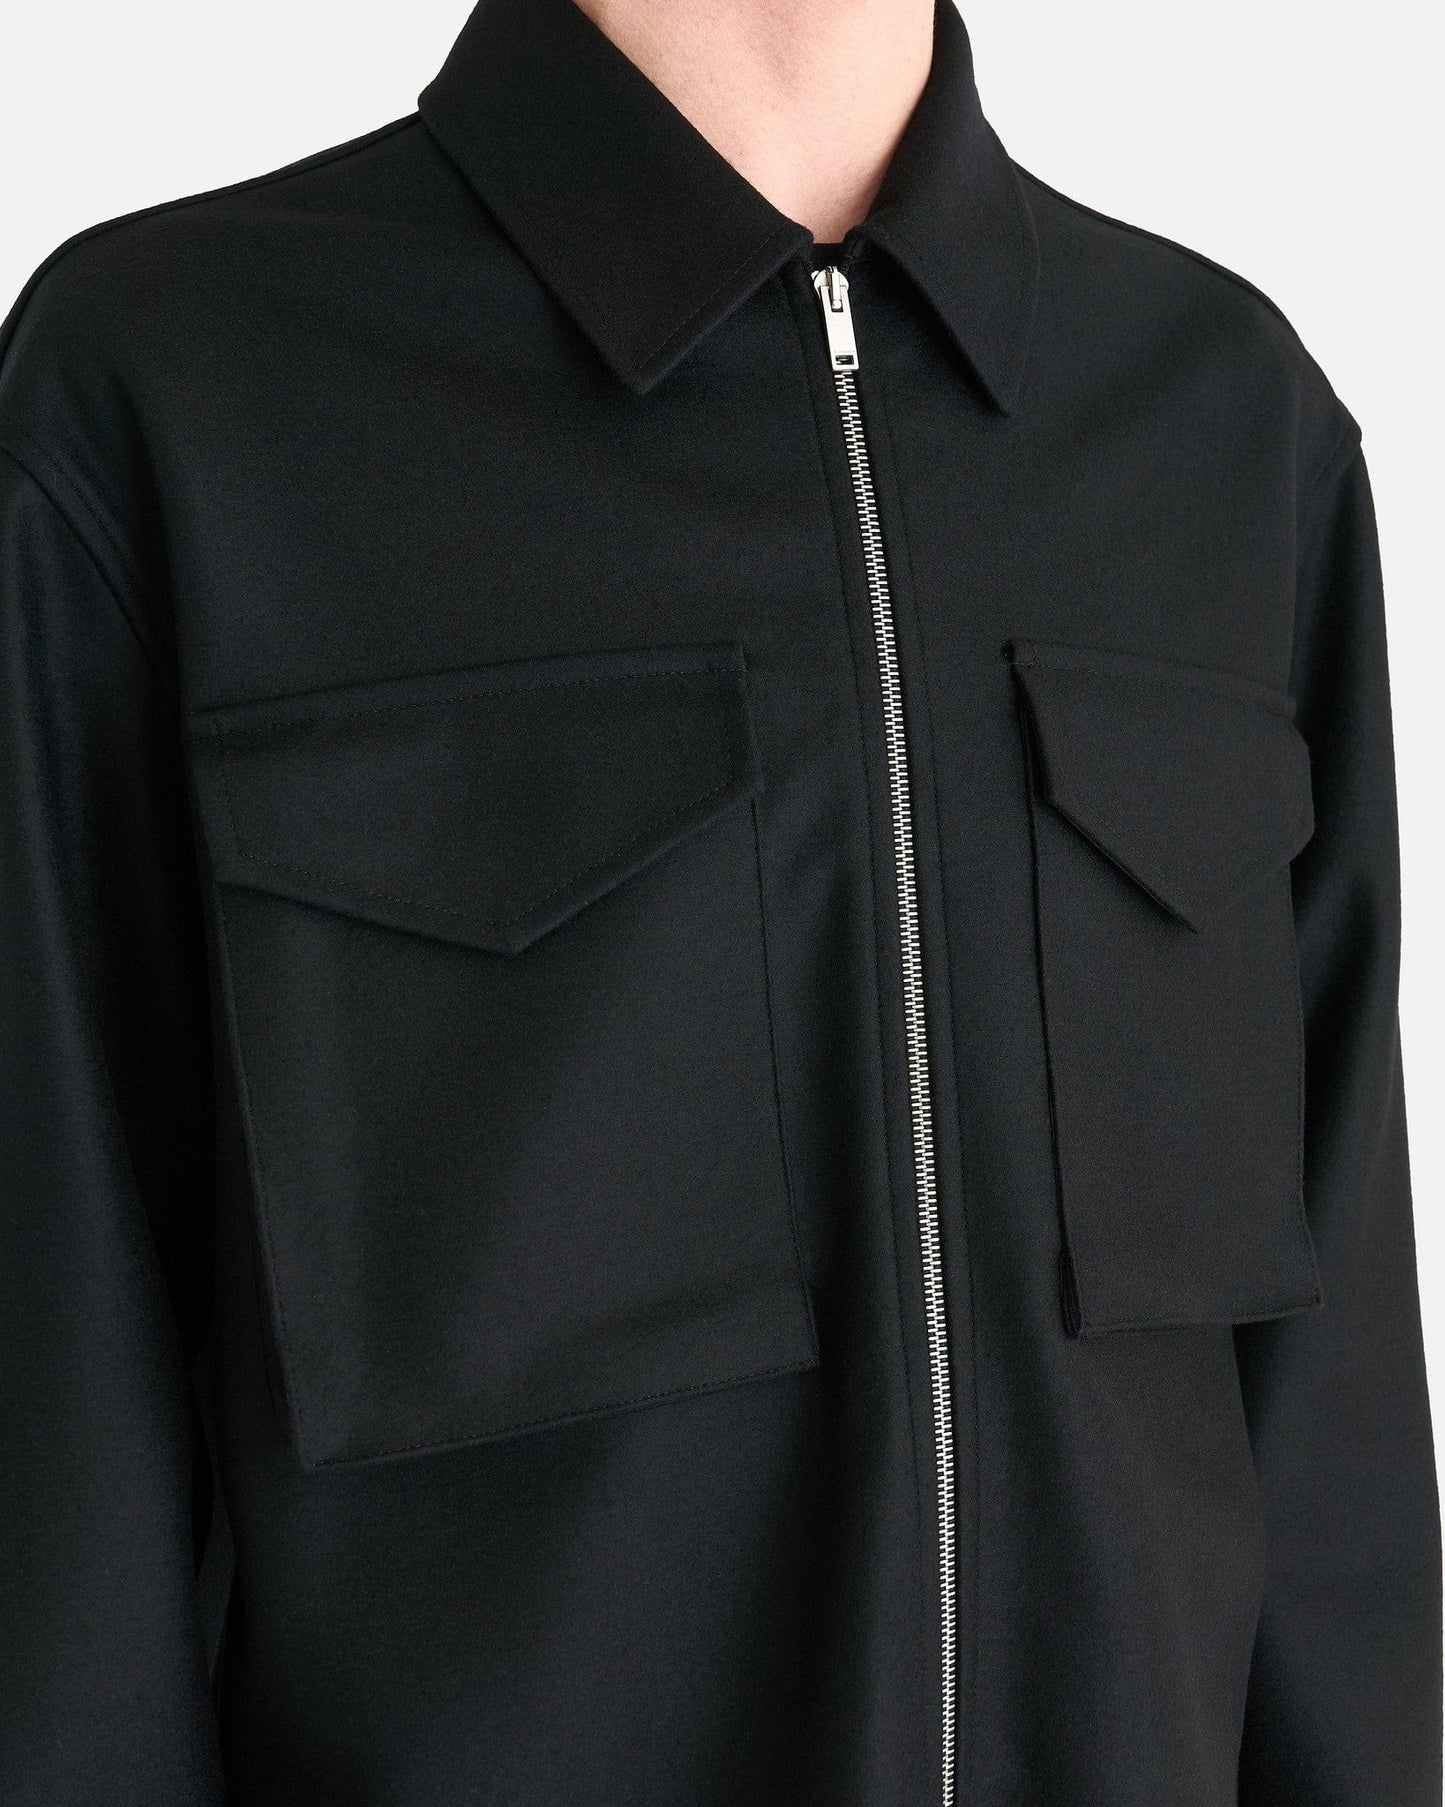 Jil Sander Men's Shirts Wool Melton Long Sleeve Shirt in Black